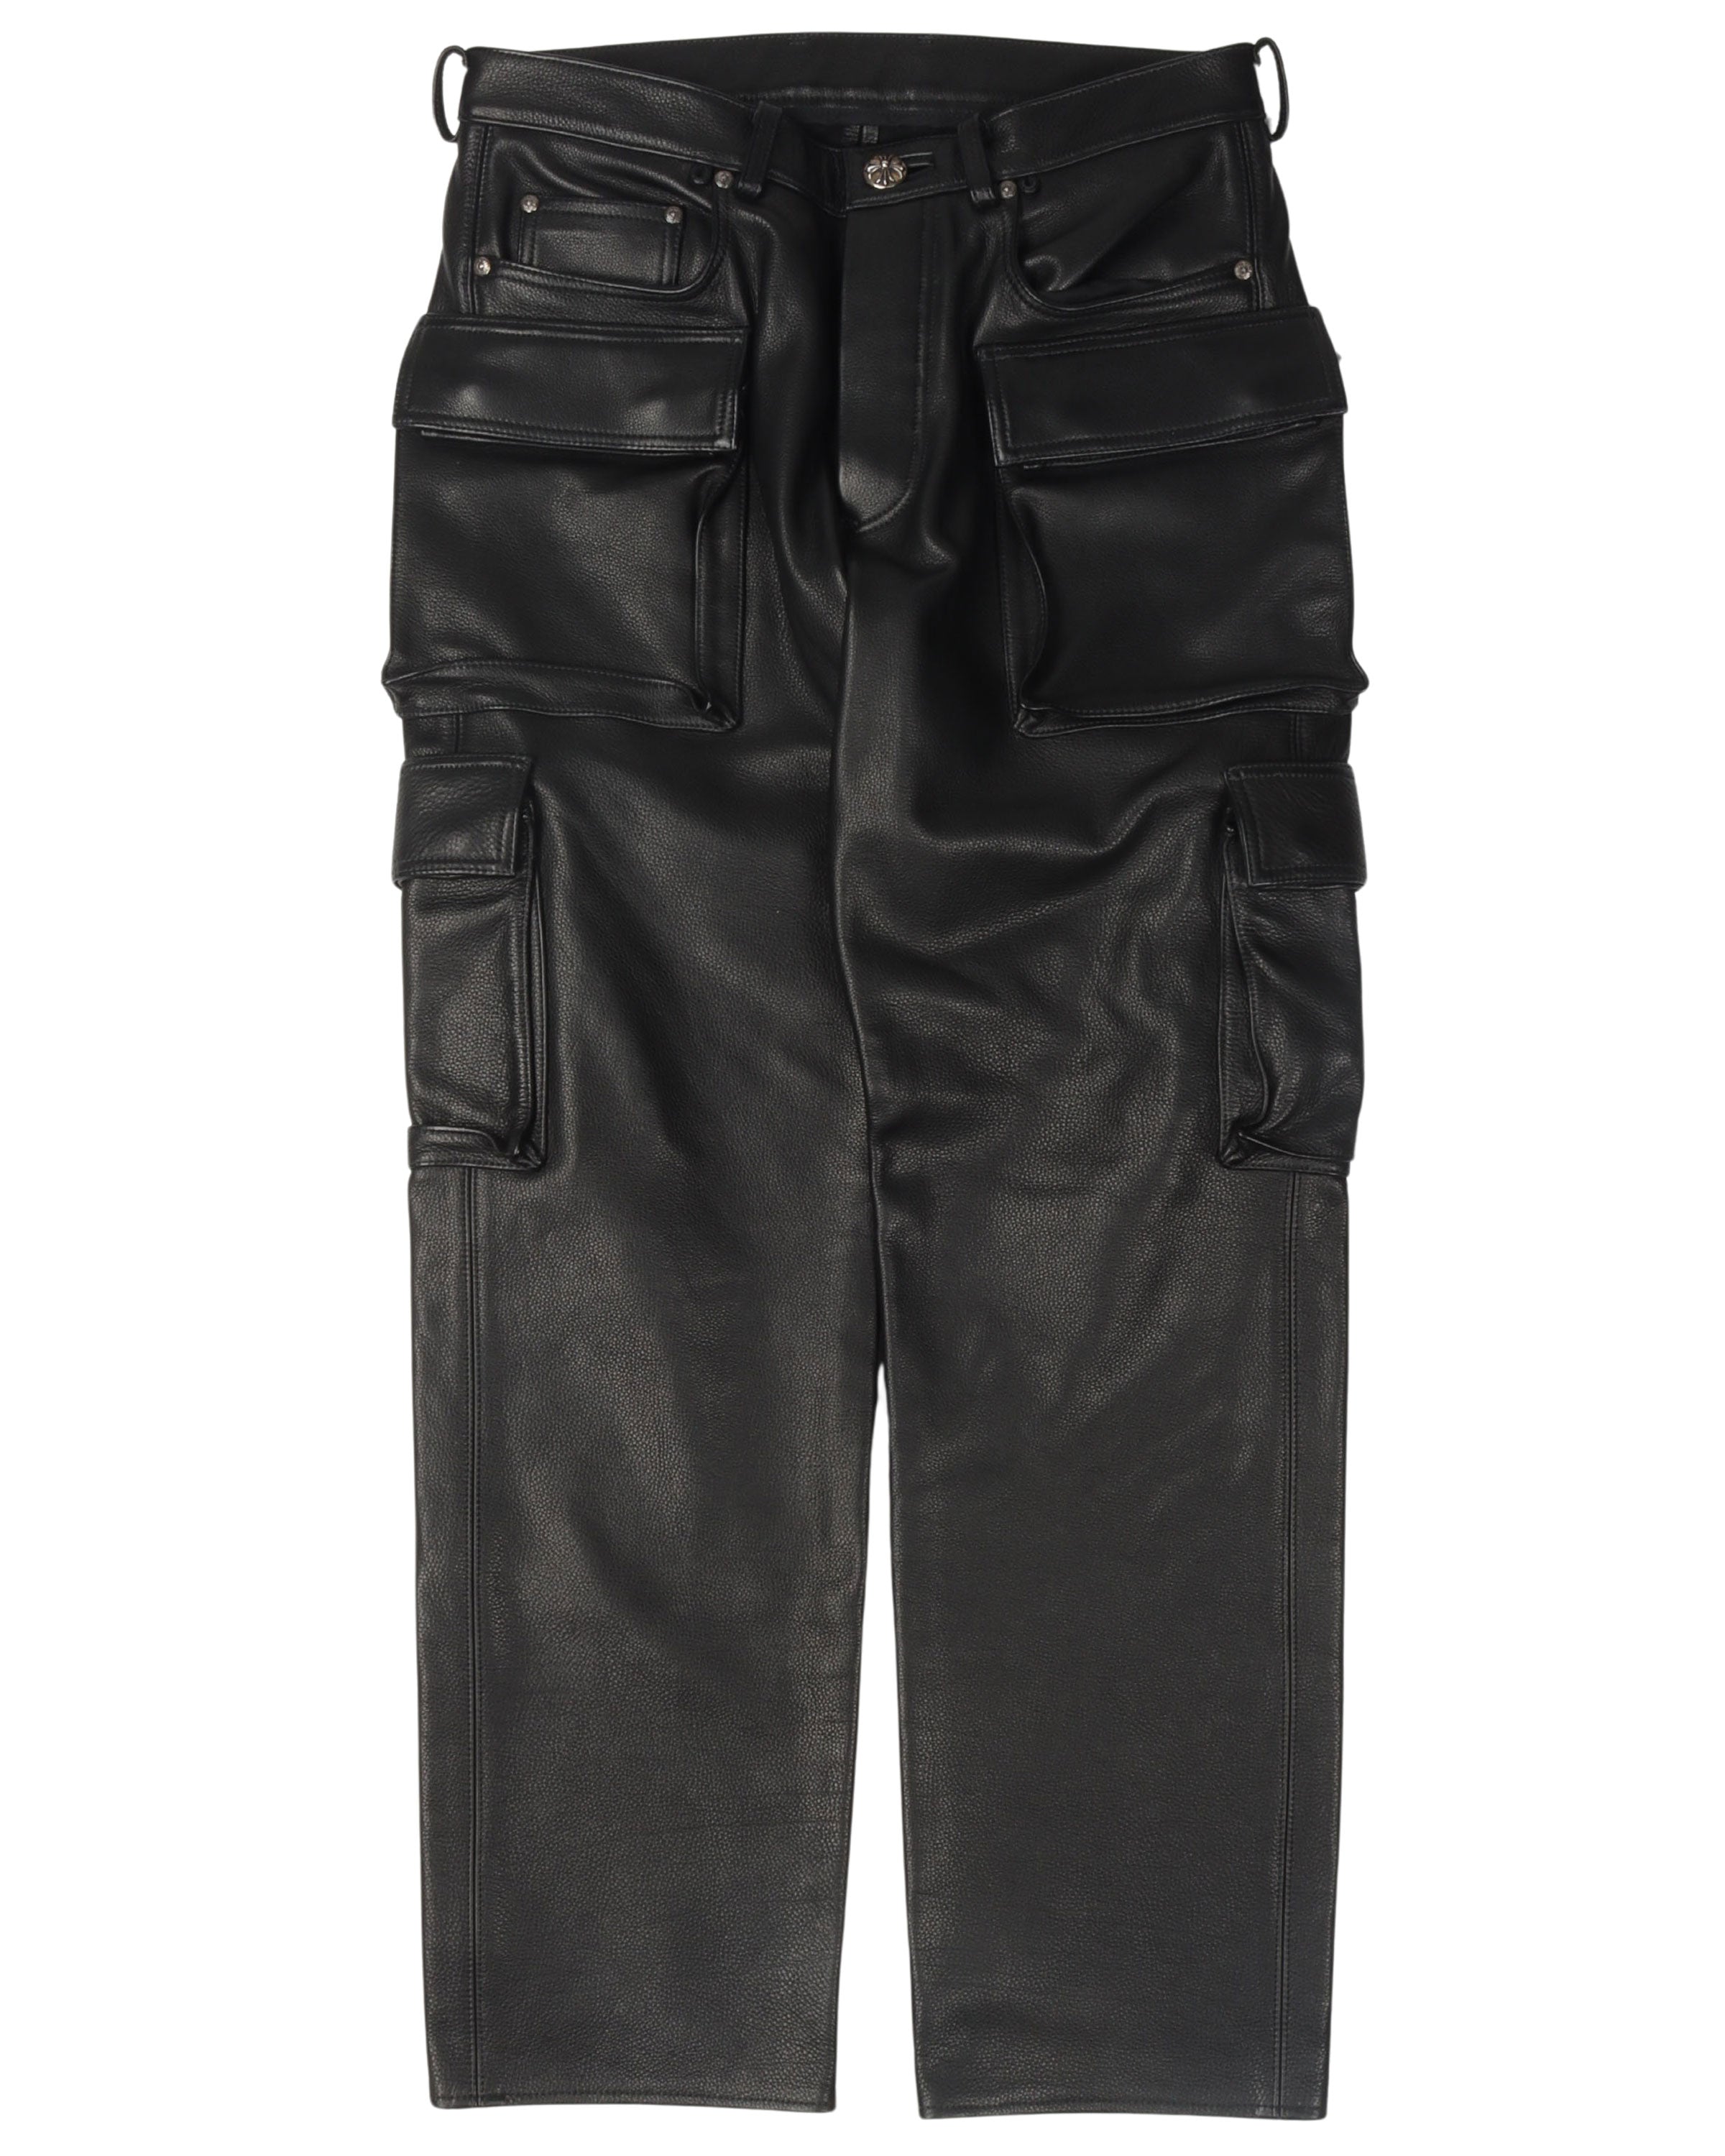 Leather 9 Pocket Cargo Pants